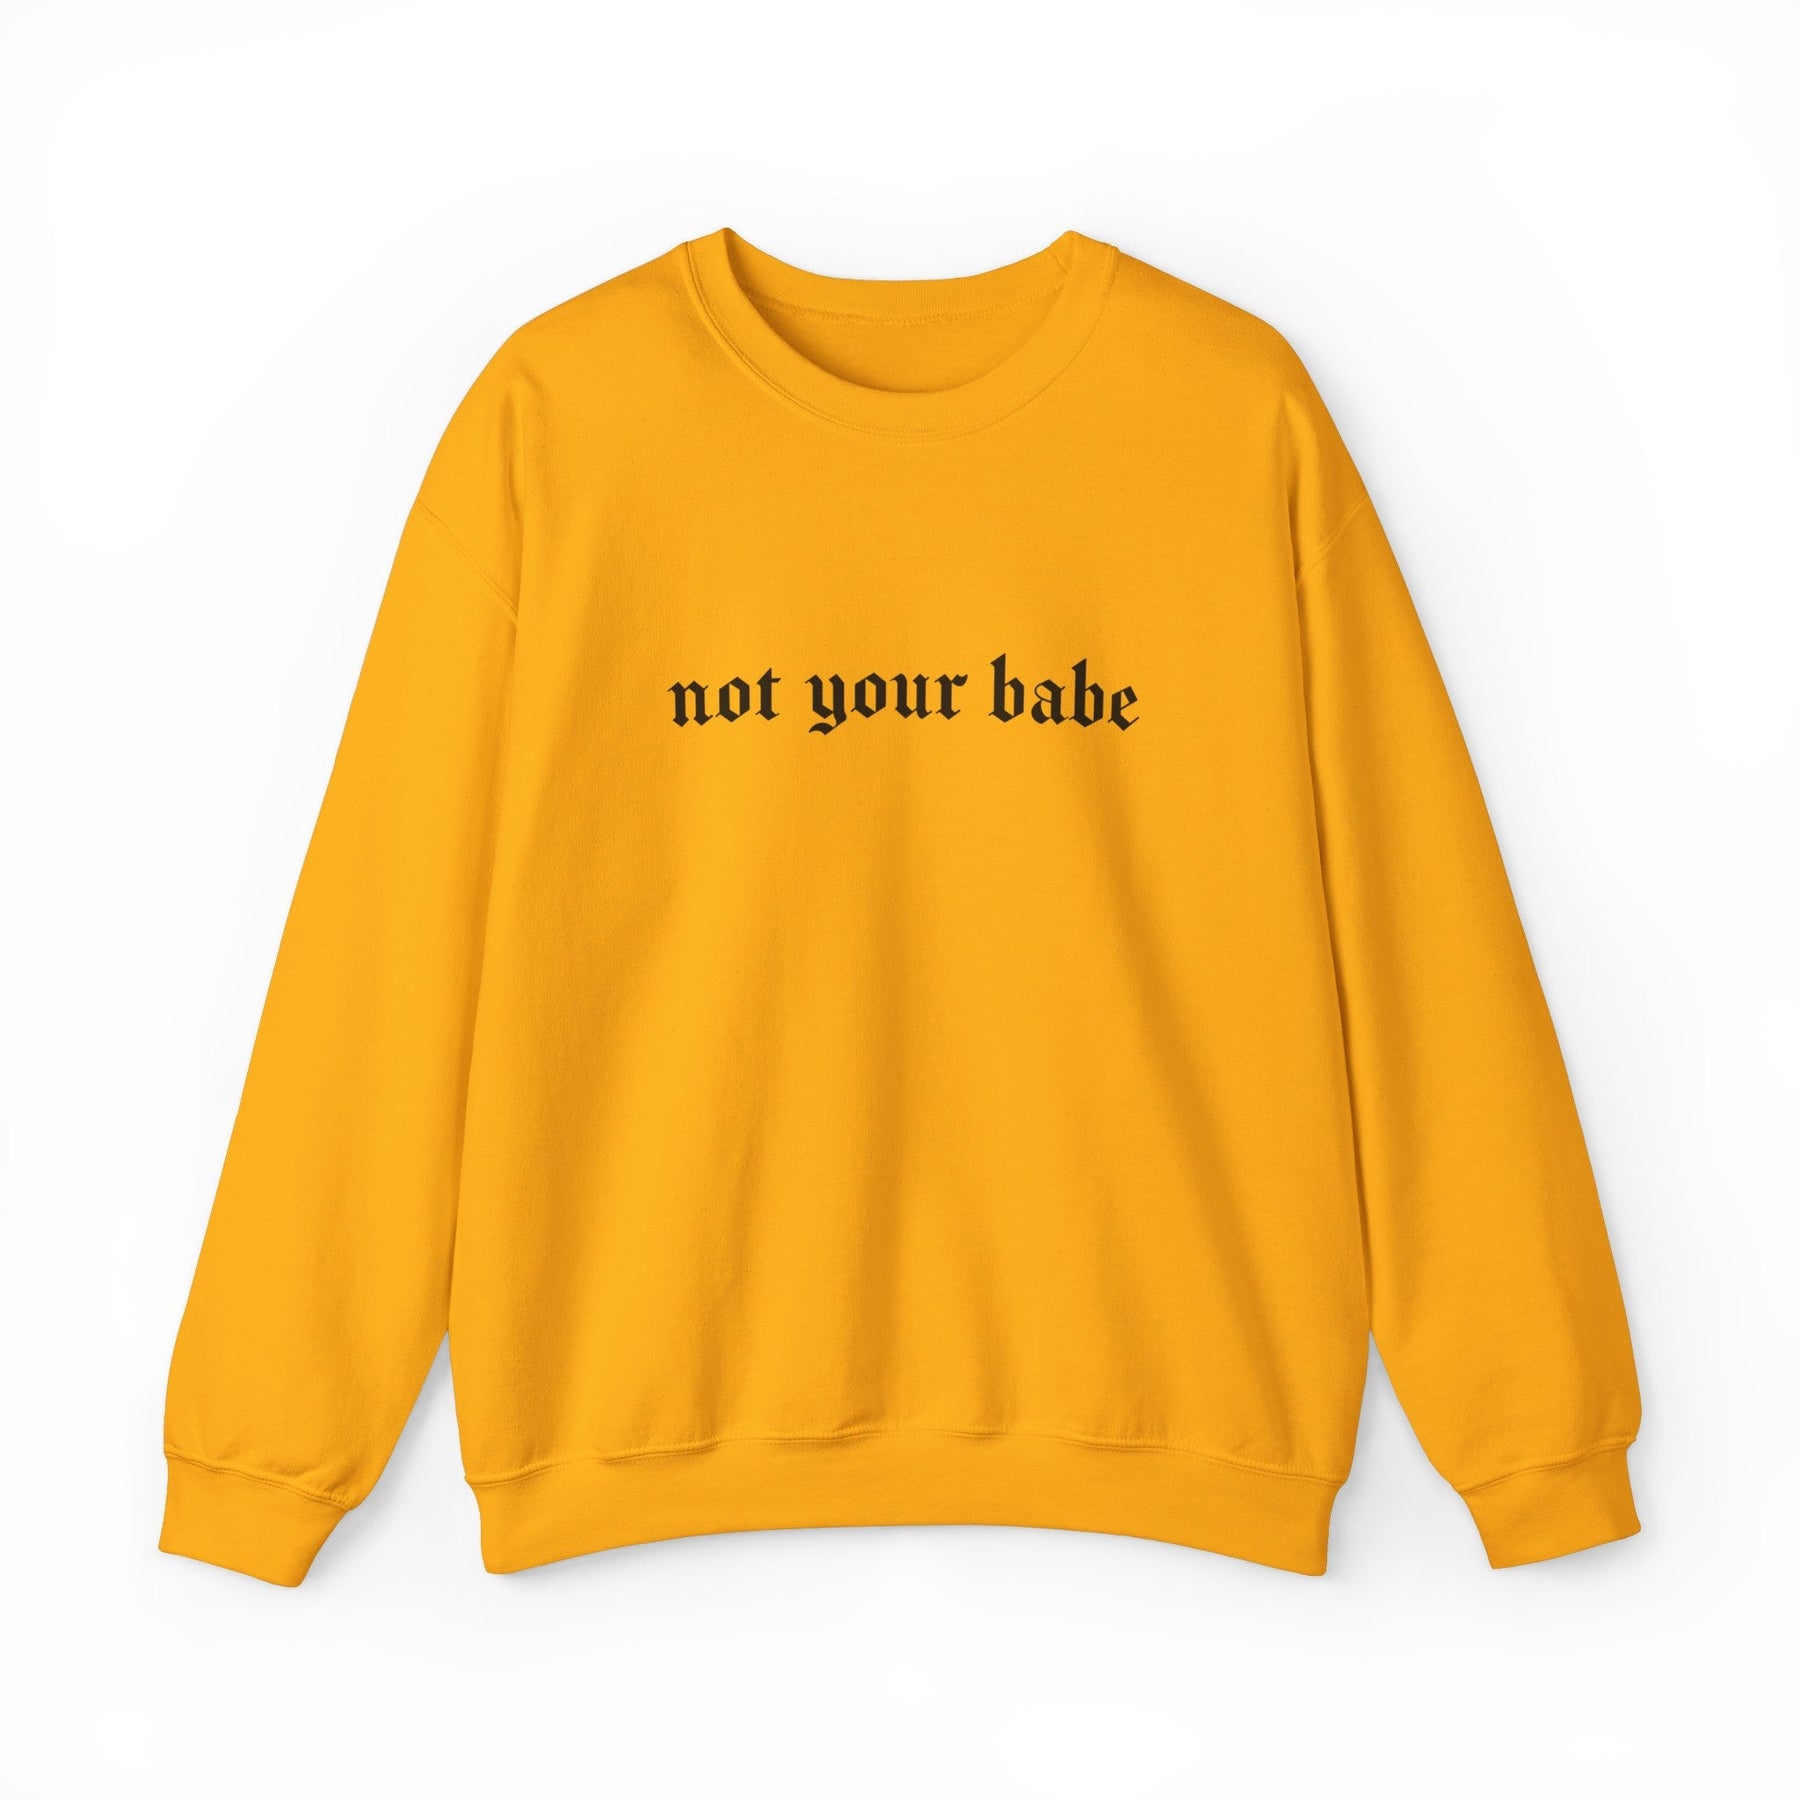 Not Your Babe Classic Goth Crew Neck Sweatshirt - Goth Cloth Co.Sweatshirt67478110984555092191